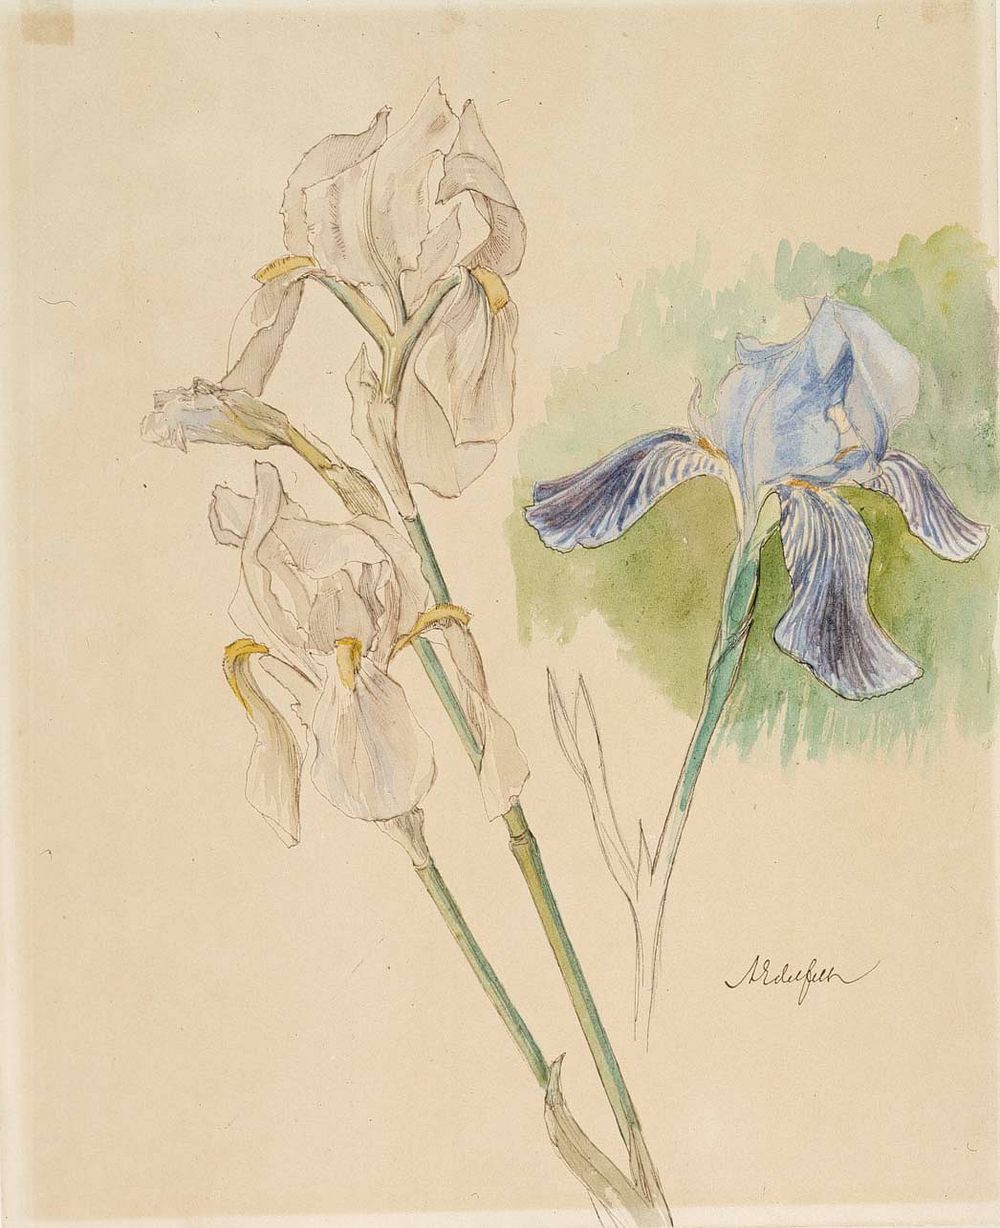 Flower studies by Albert Edelfelt